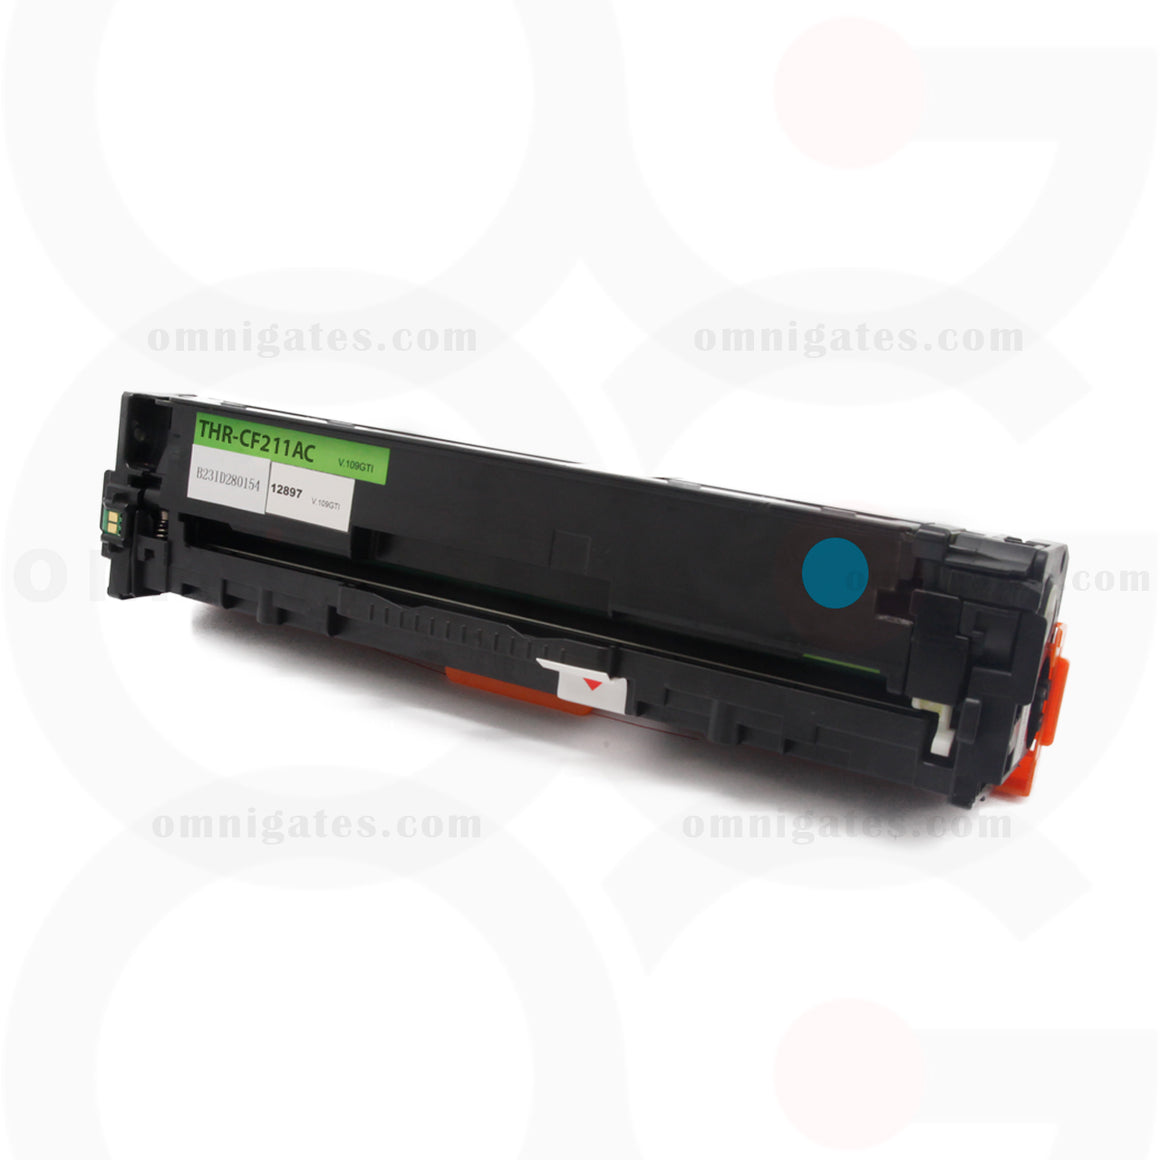 cyan OGP Compatible HP CF211AC Laser Toner Cartridge